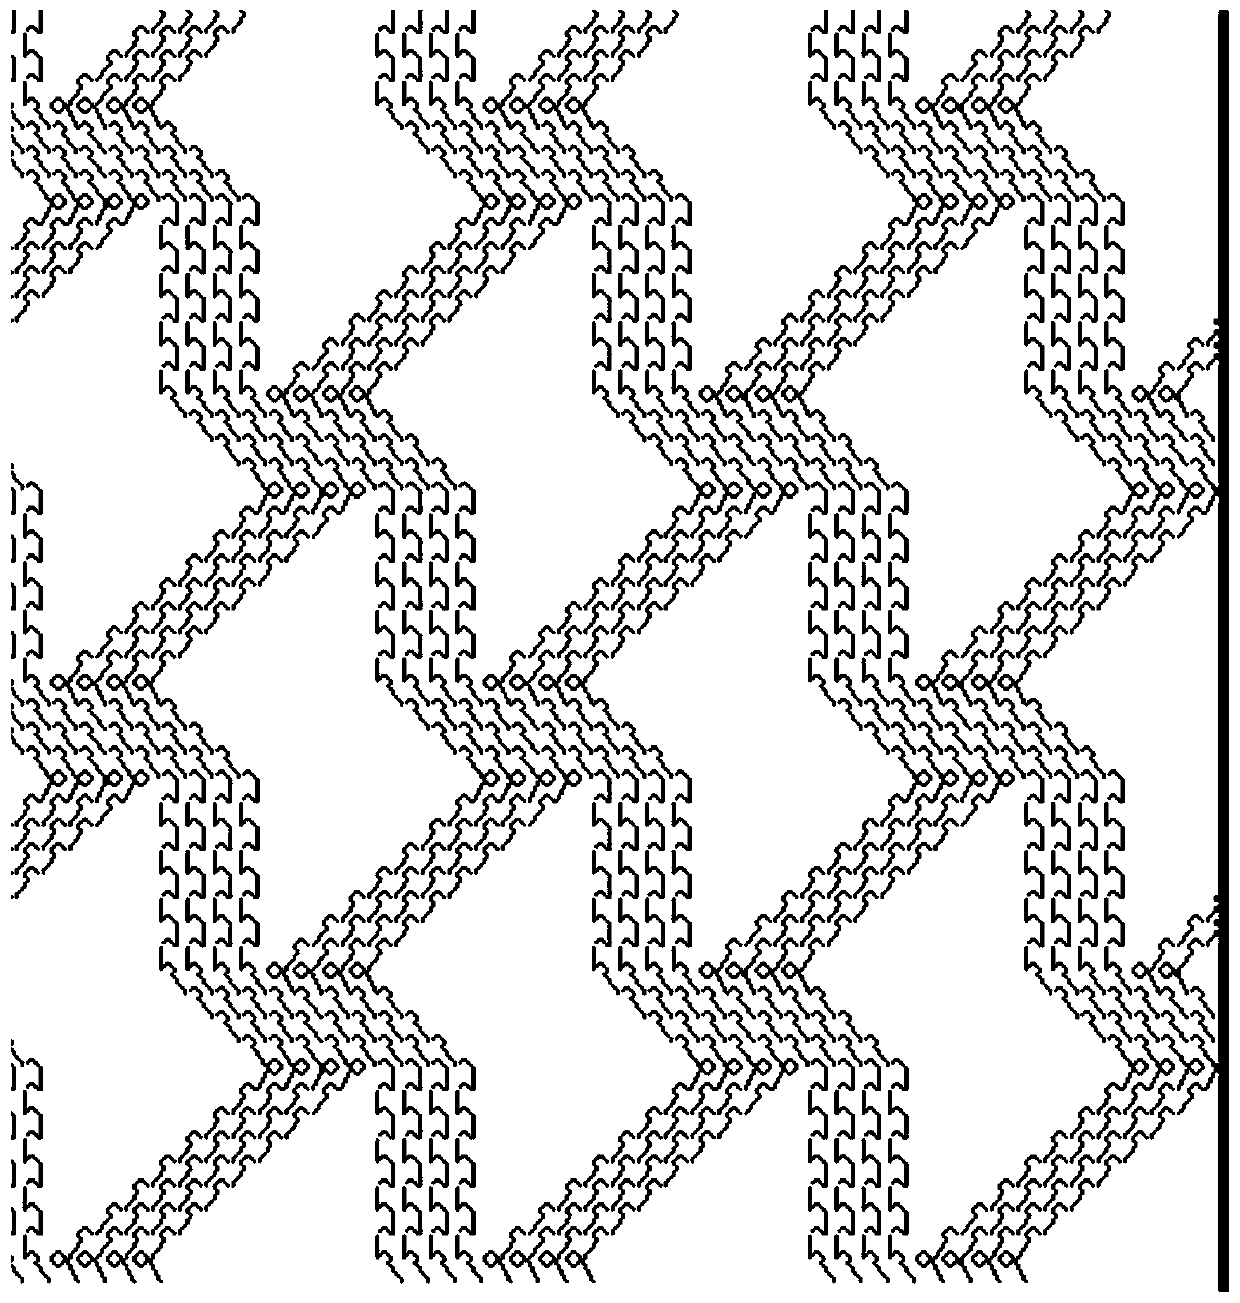 A method of making imitation heat-pressed three-dimensional fabric